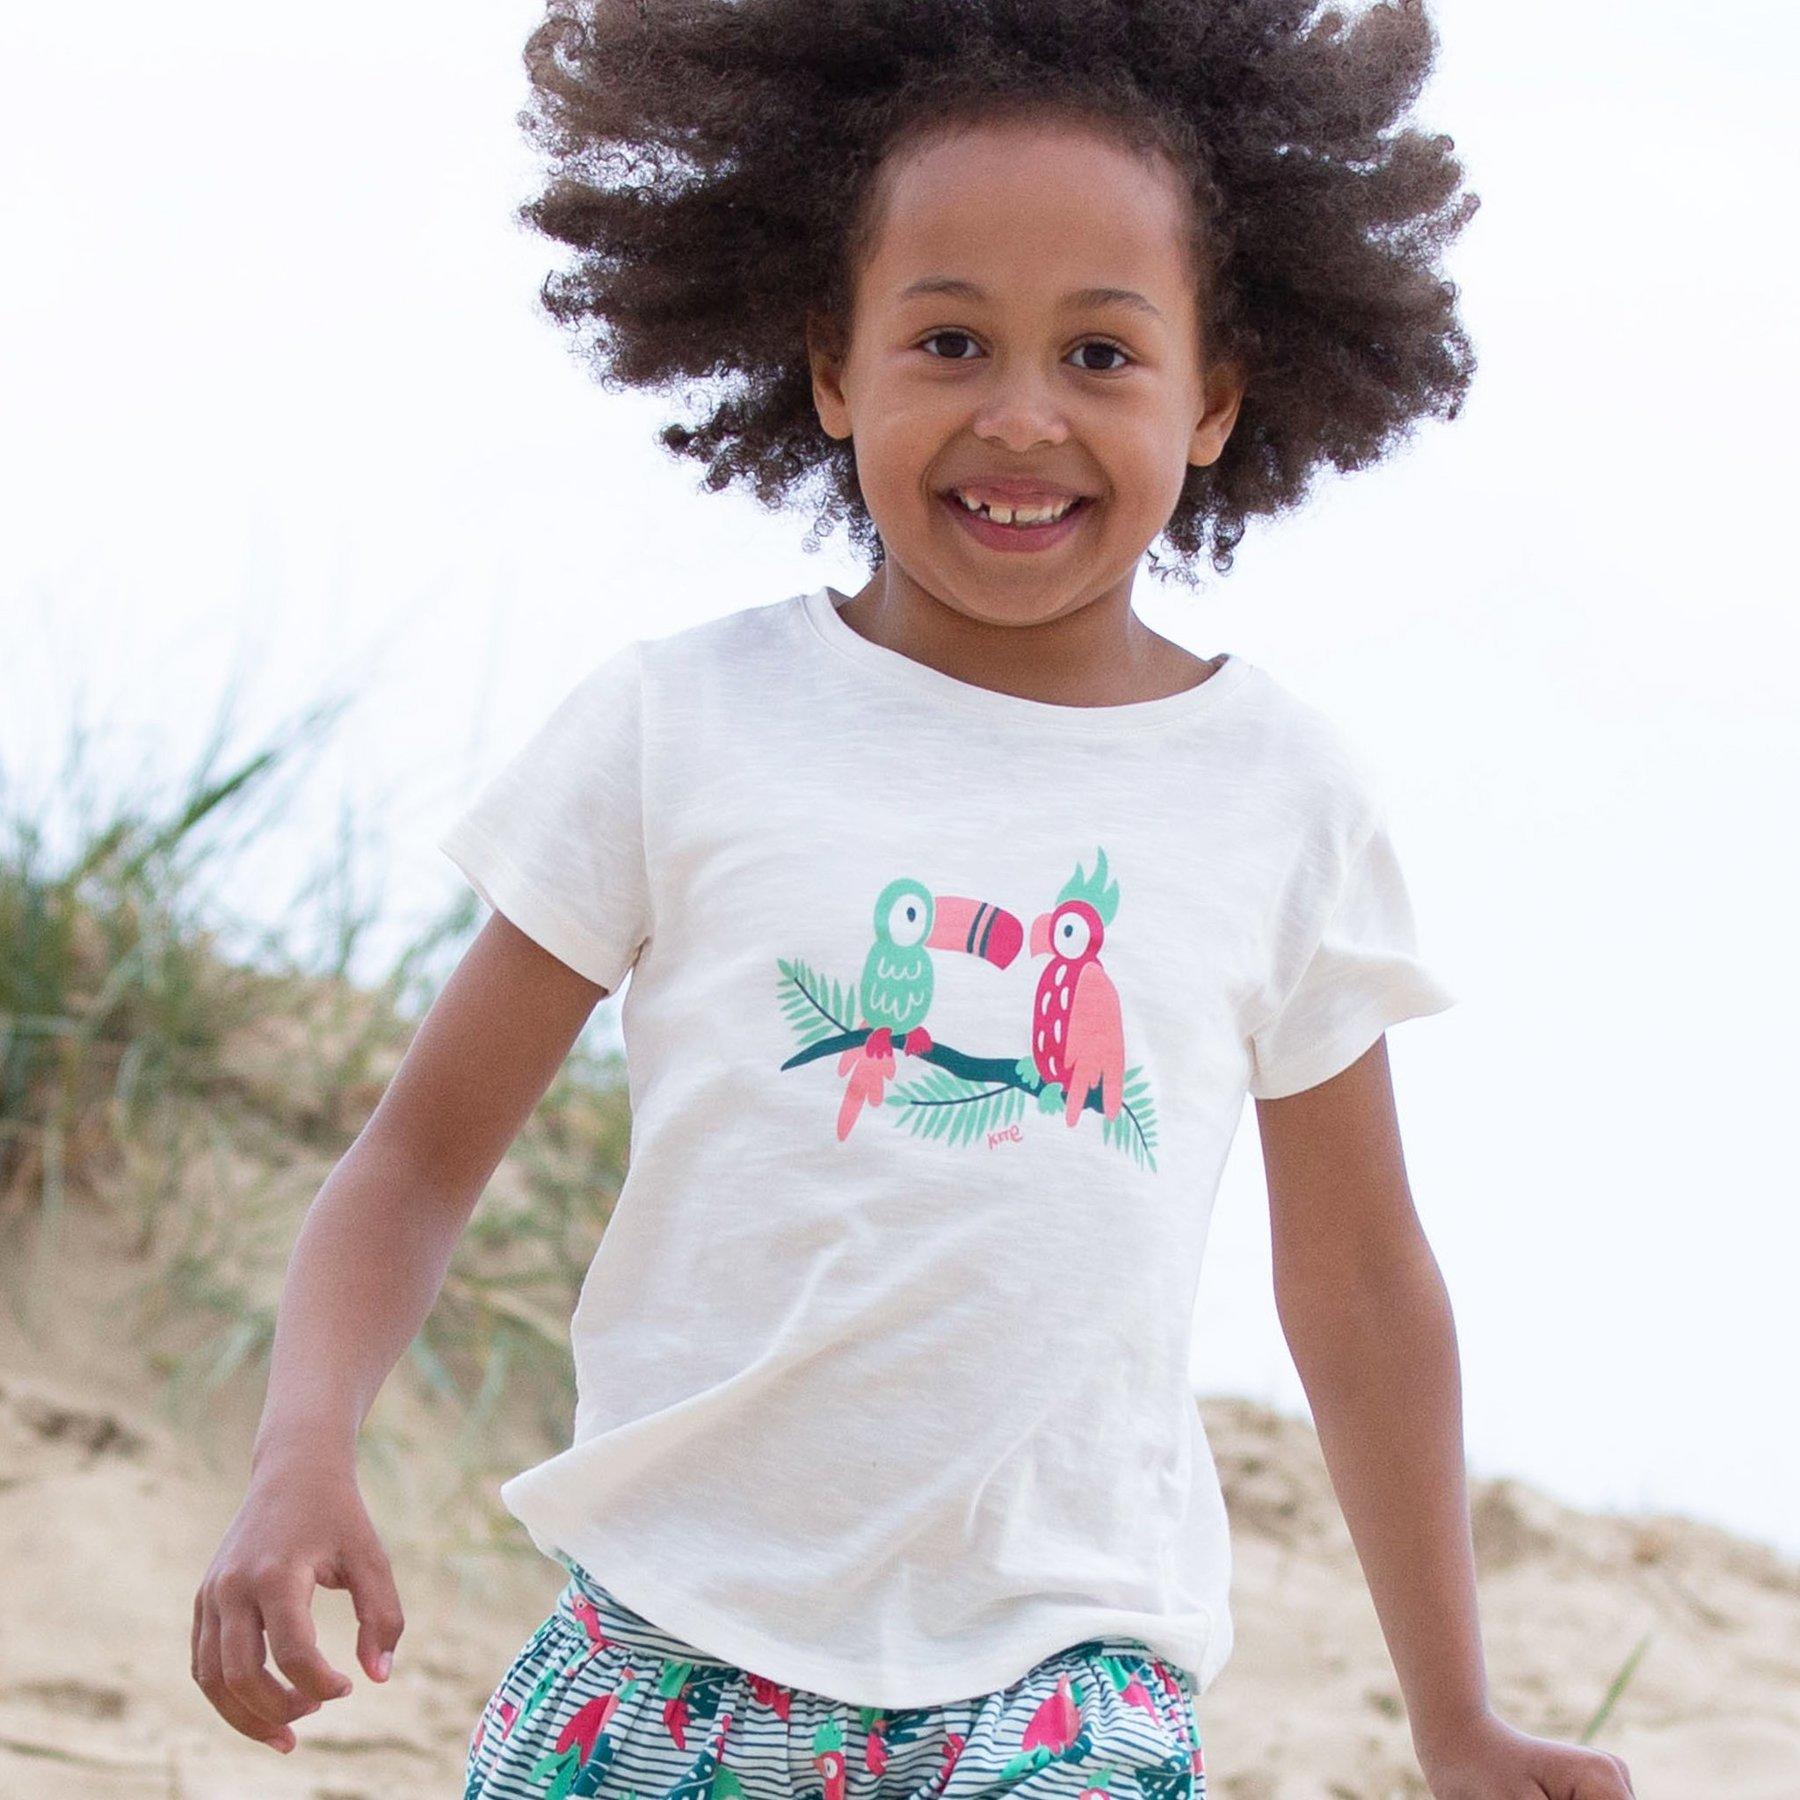 Girl wearing Kite Clothing Two-Can T-Shirt